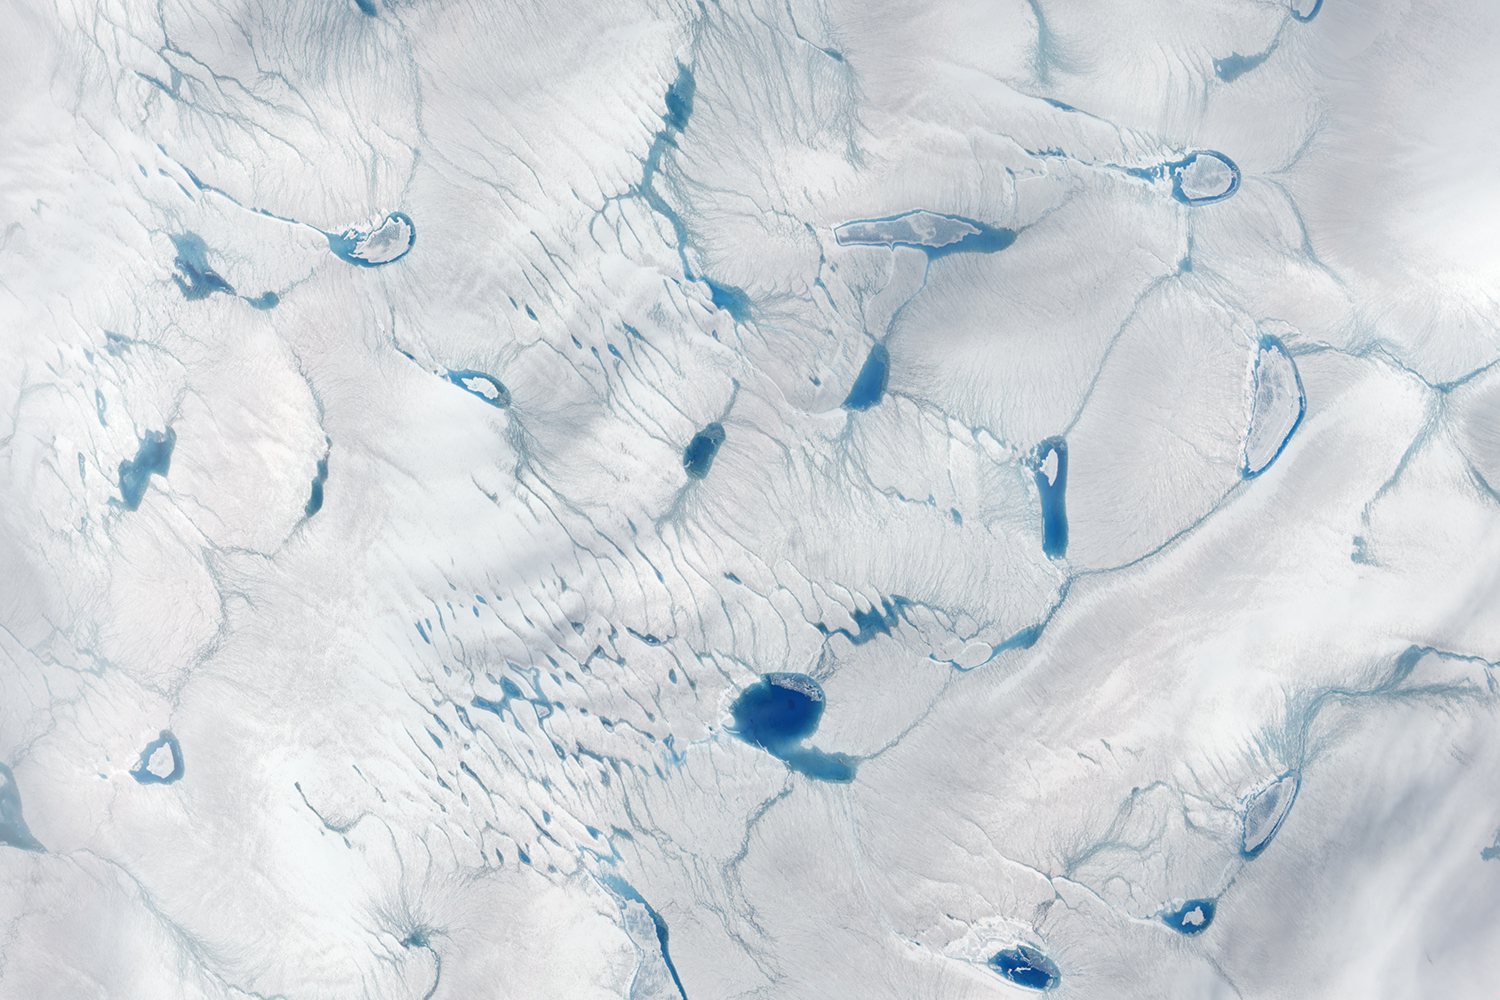 nasa eo 1 images greenland glacier melt